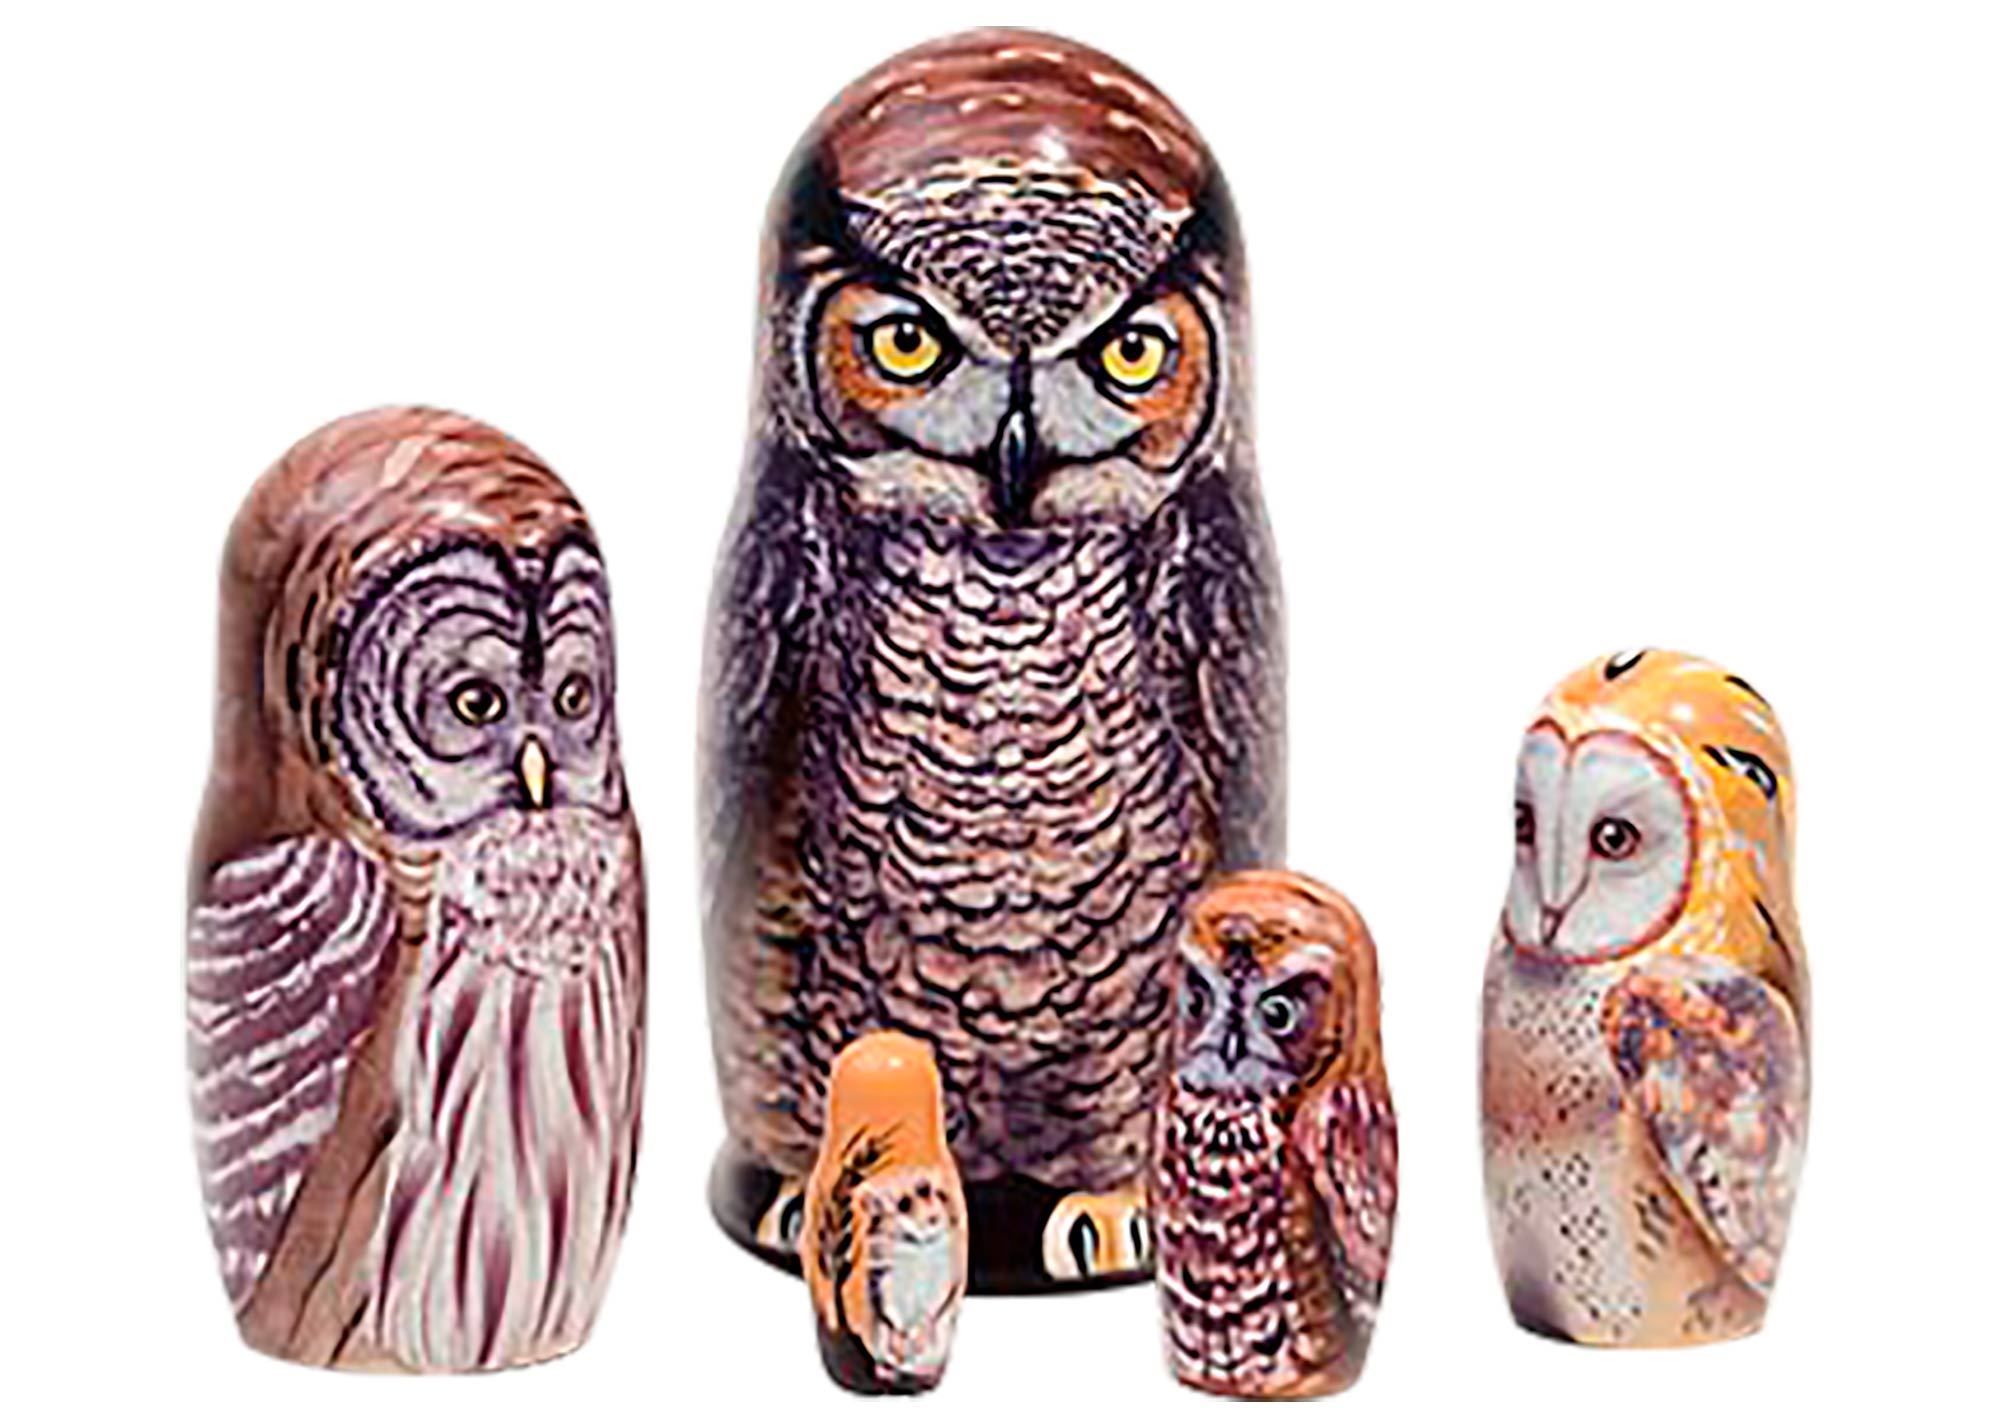 Buy Great Horned Owl Nesting Doll 5pc./6" at GoldenCockerel.com